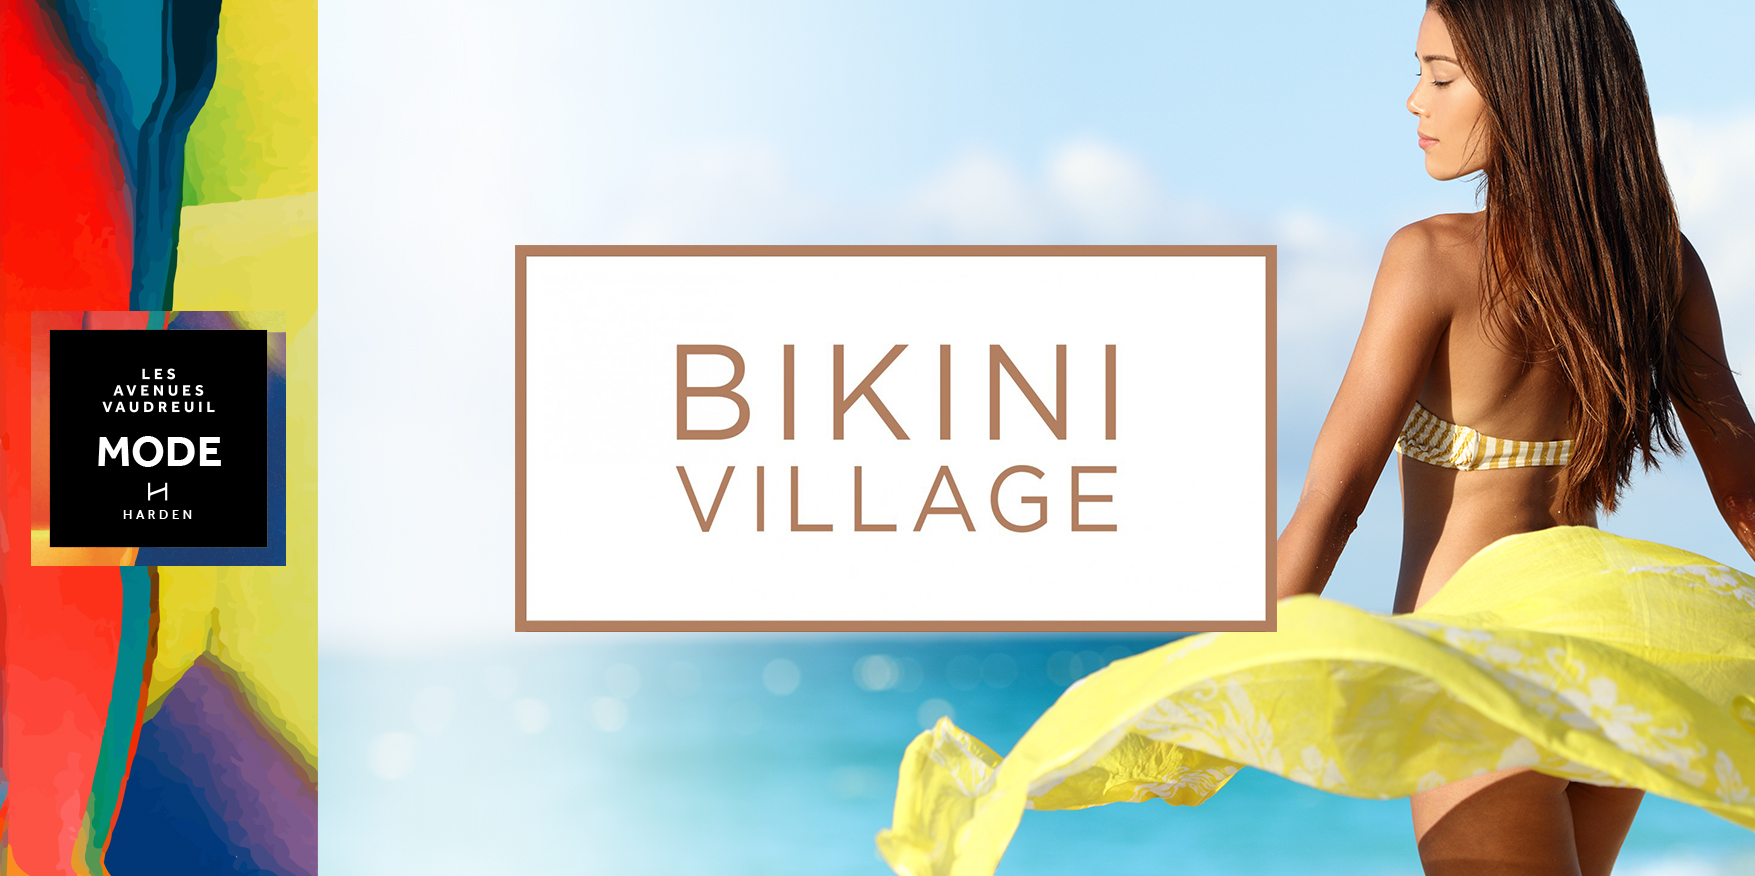 Bikini Village : Maintenant ouvert à l’Avenue Mode